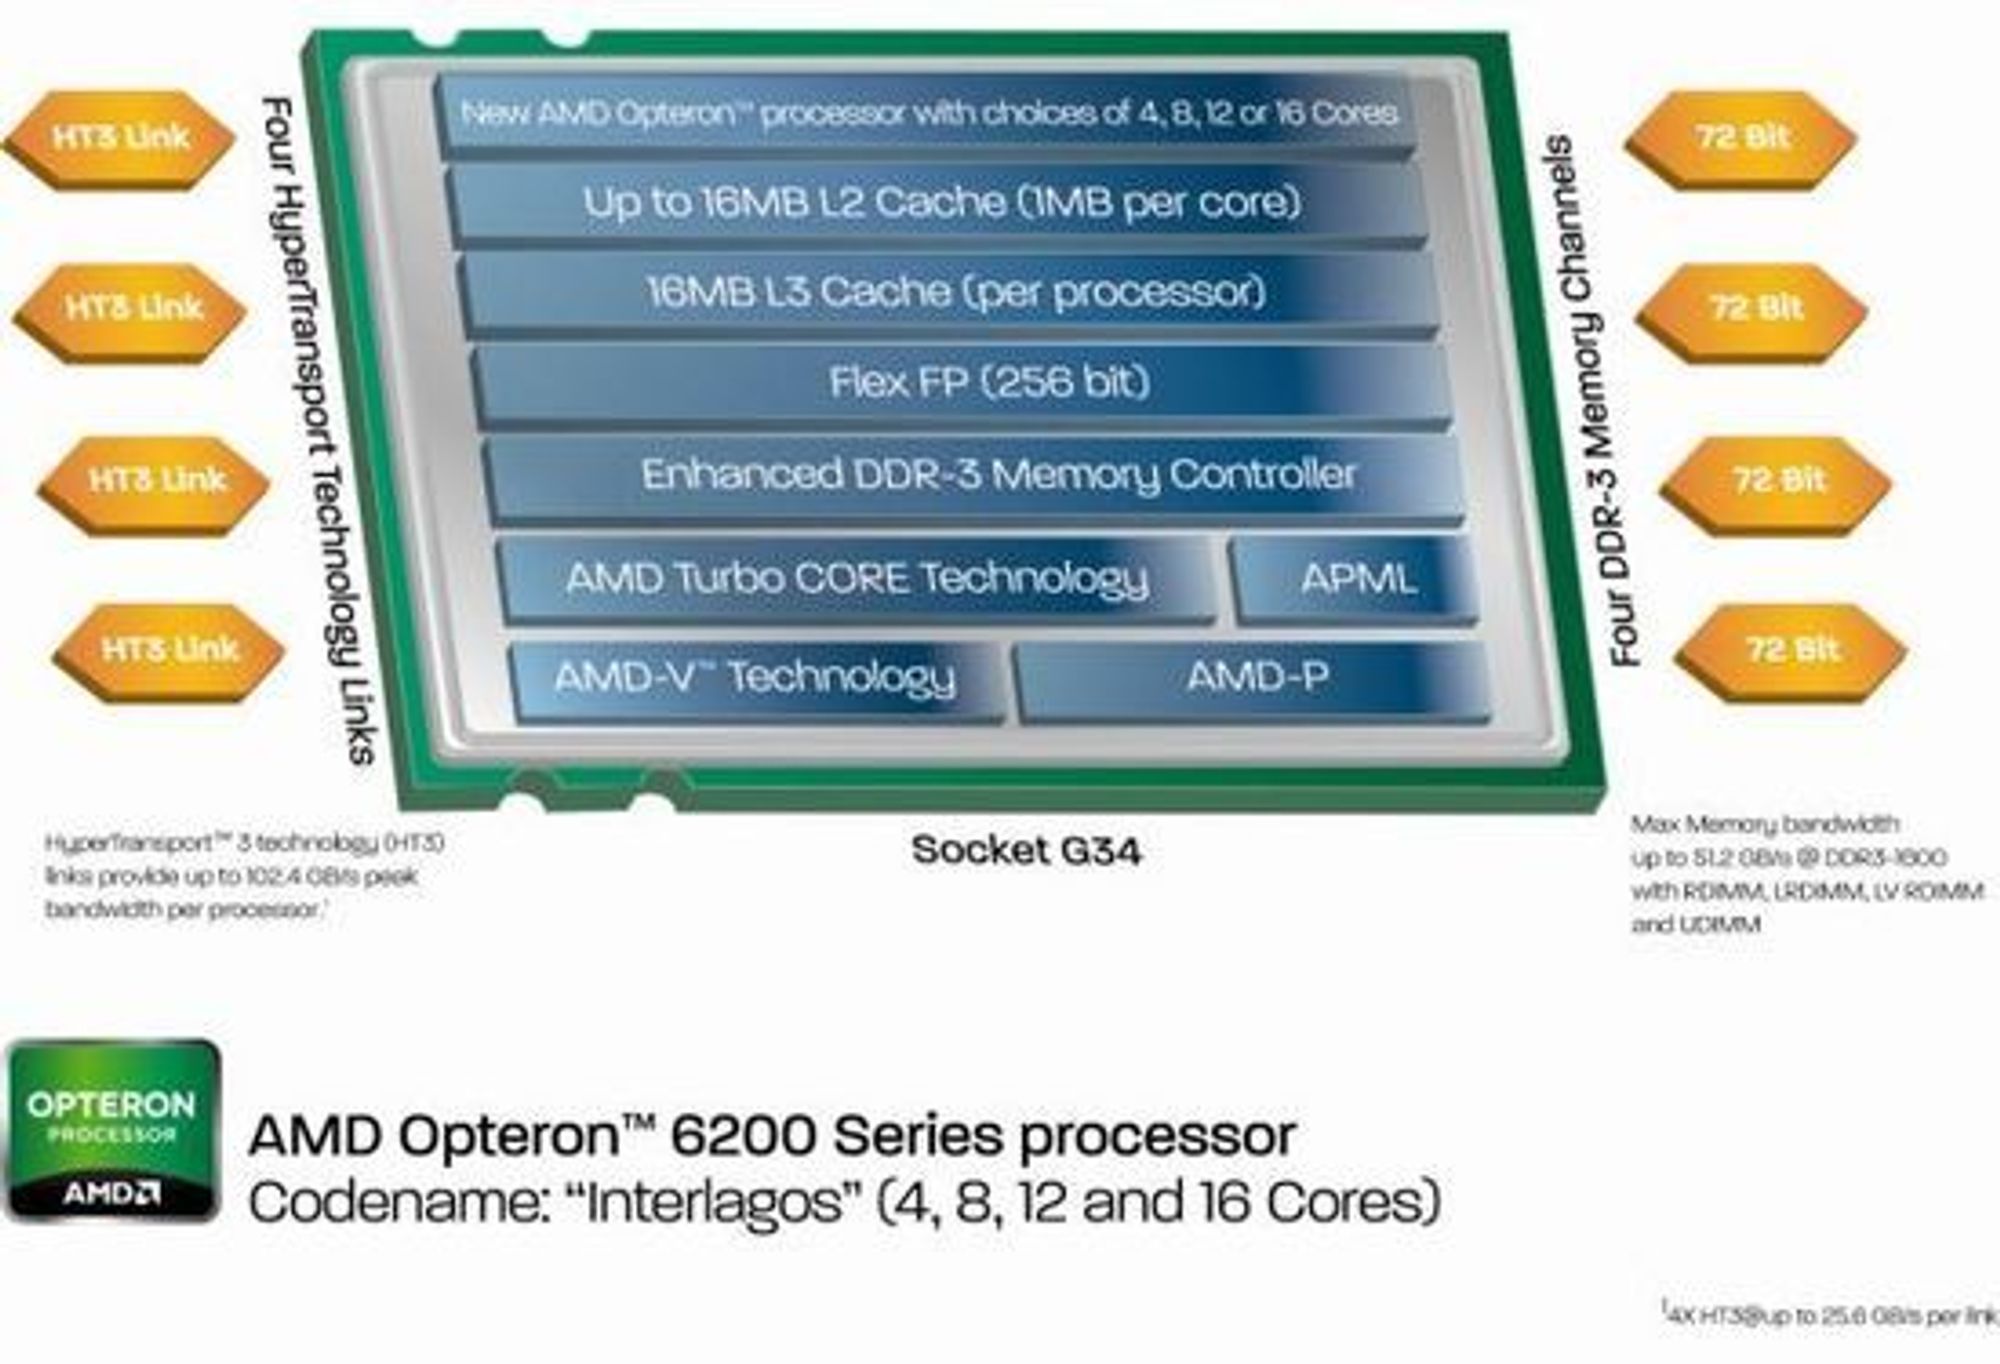 Blokkdiagram over de viktigste komponentene i AMD Opteron 6200 Series.